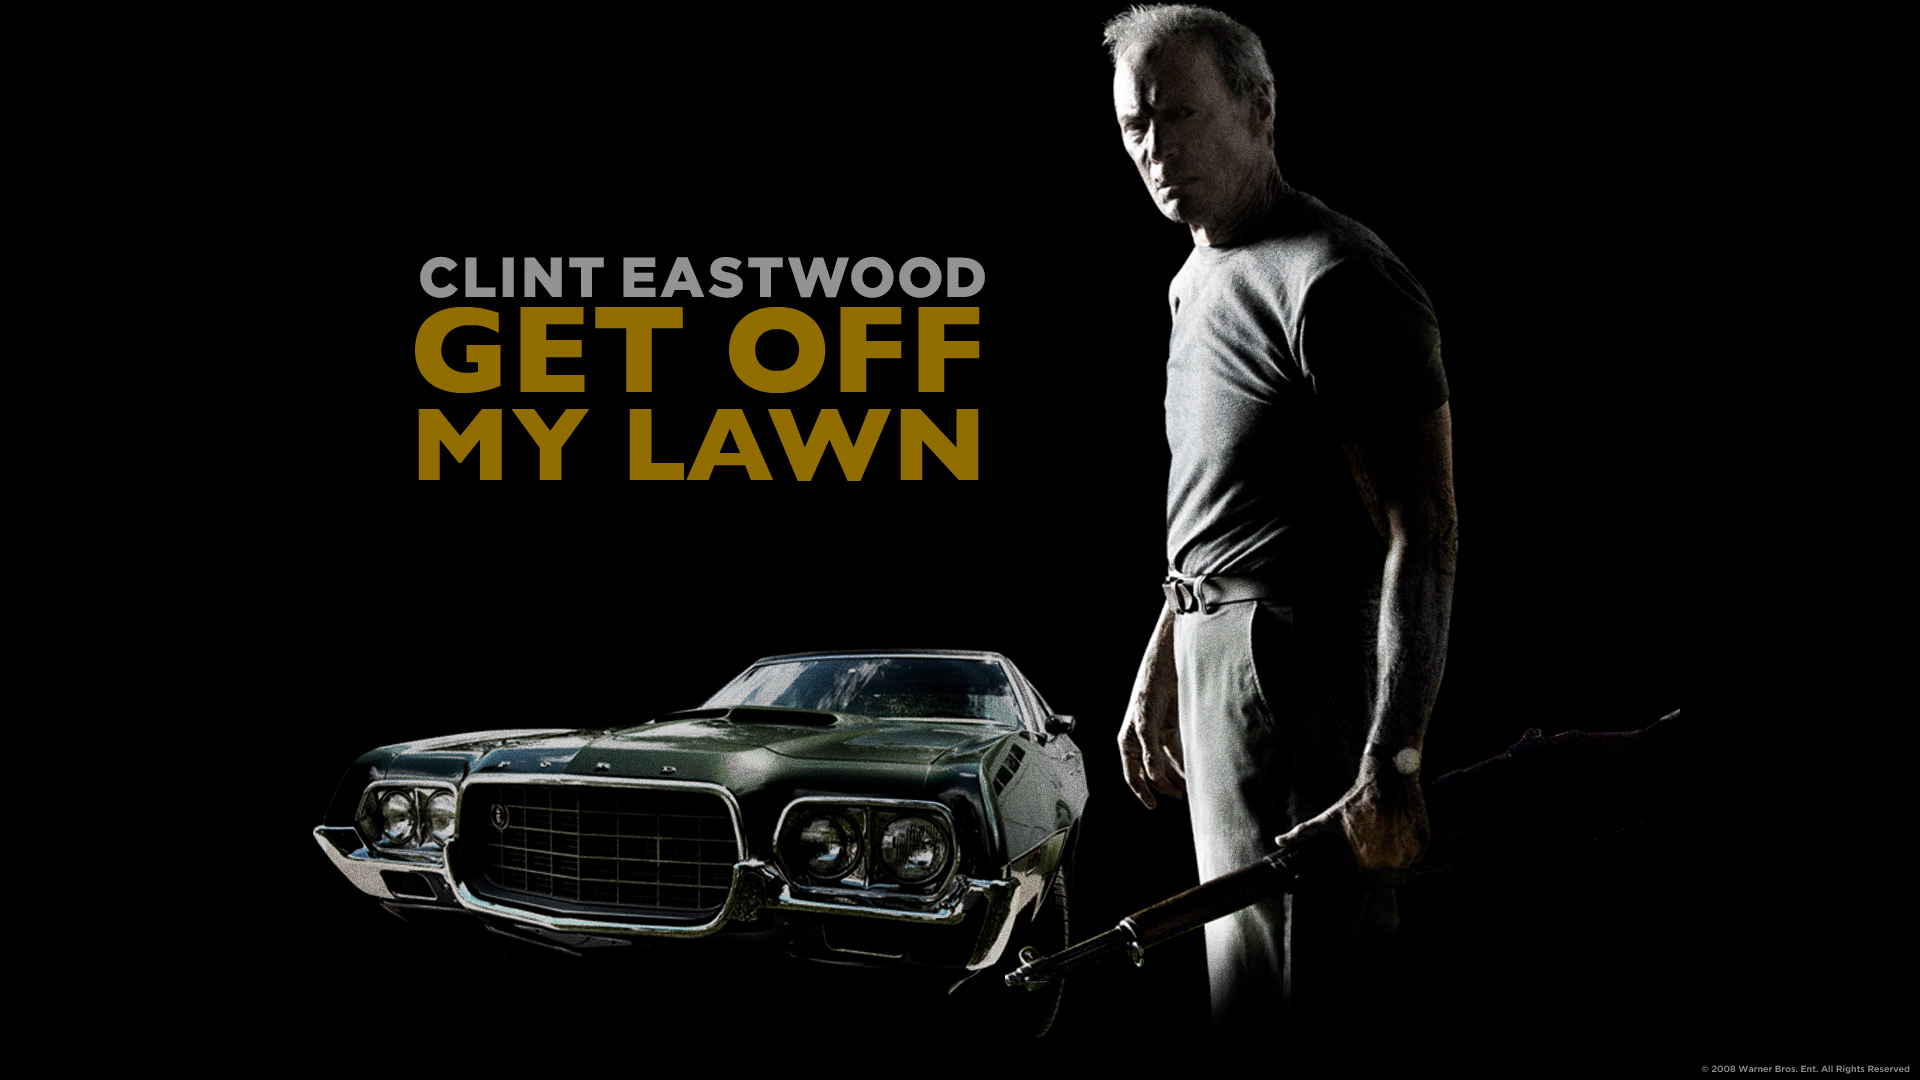 Clint Eastwood Gran Torino Get Off My Lawn HD Wallpaper Of Movies Tv